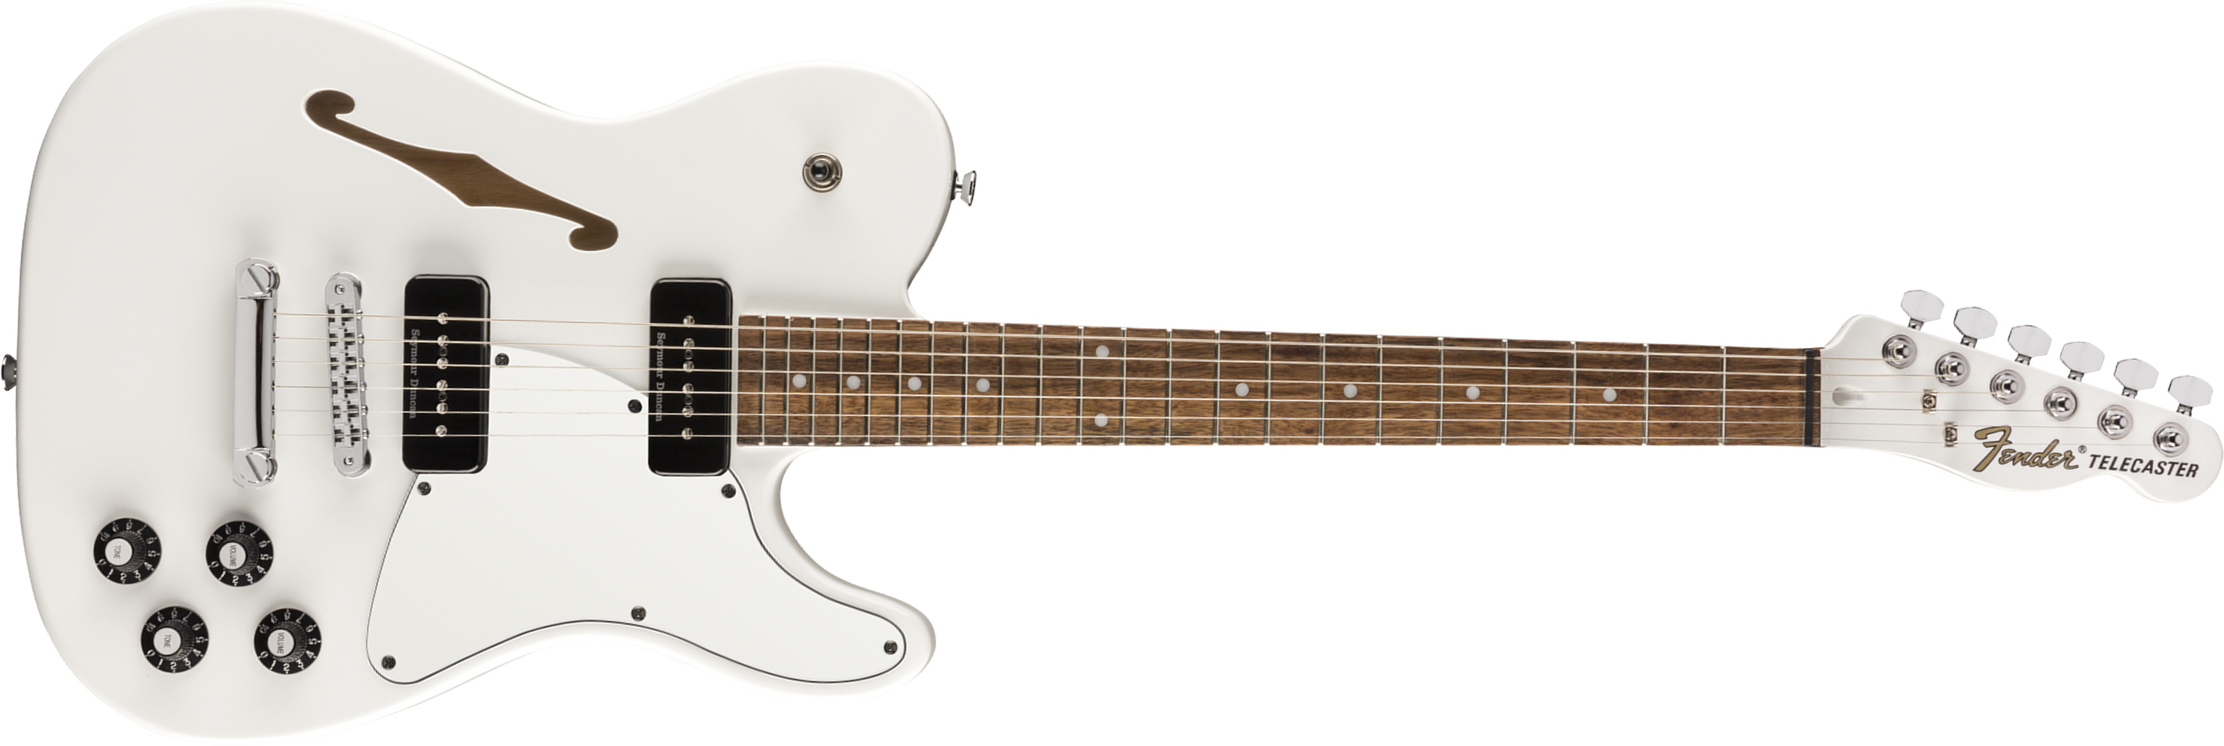 Fender Jim Adkins Tele Ja-90 Mex Signature 2p90 Lau - White - Televorm elektrische gitaar - Main picture